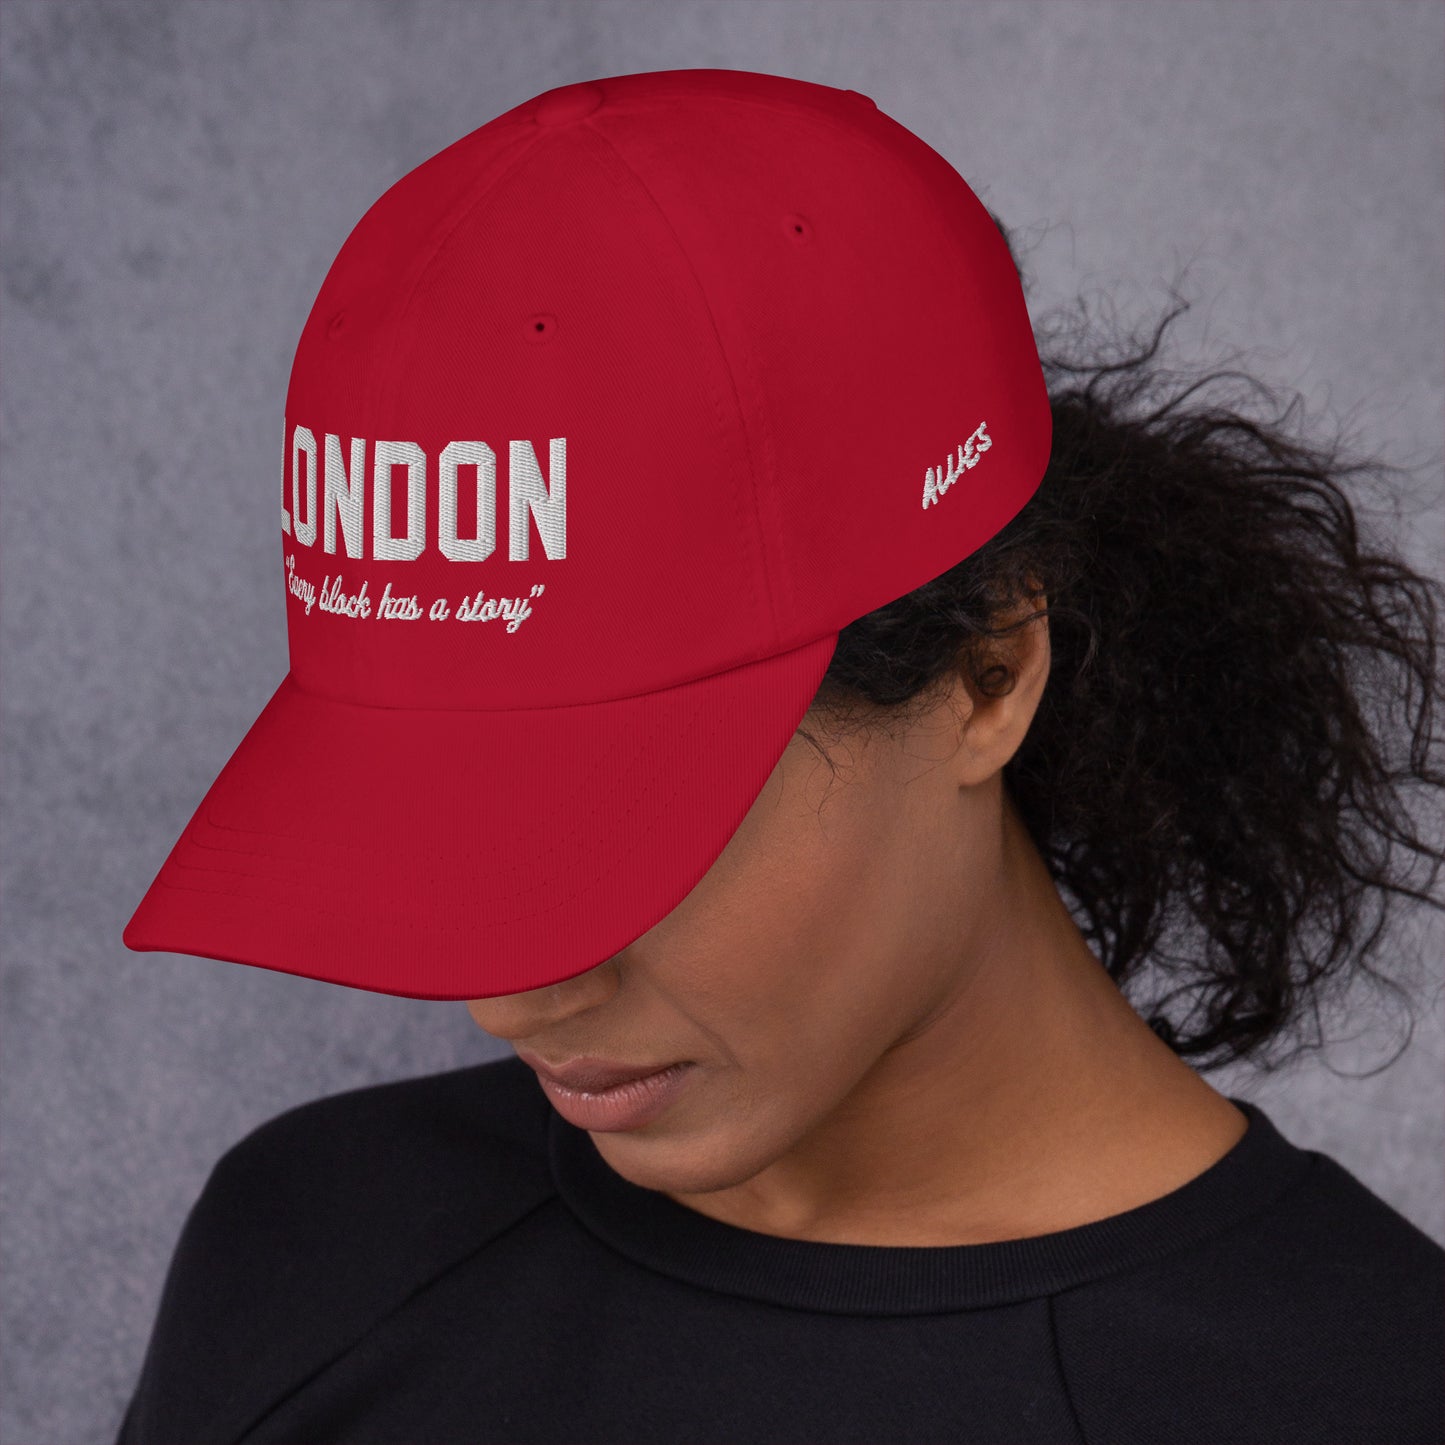 London Story Hat